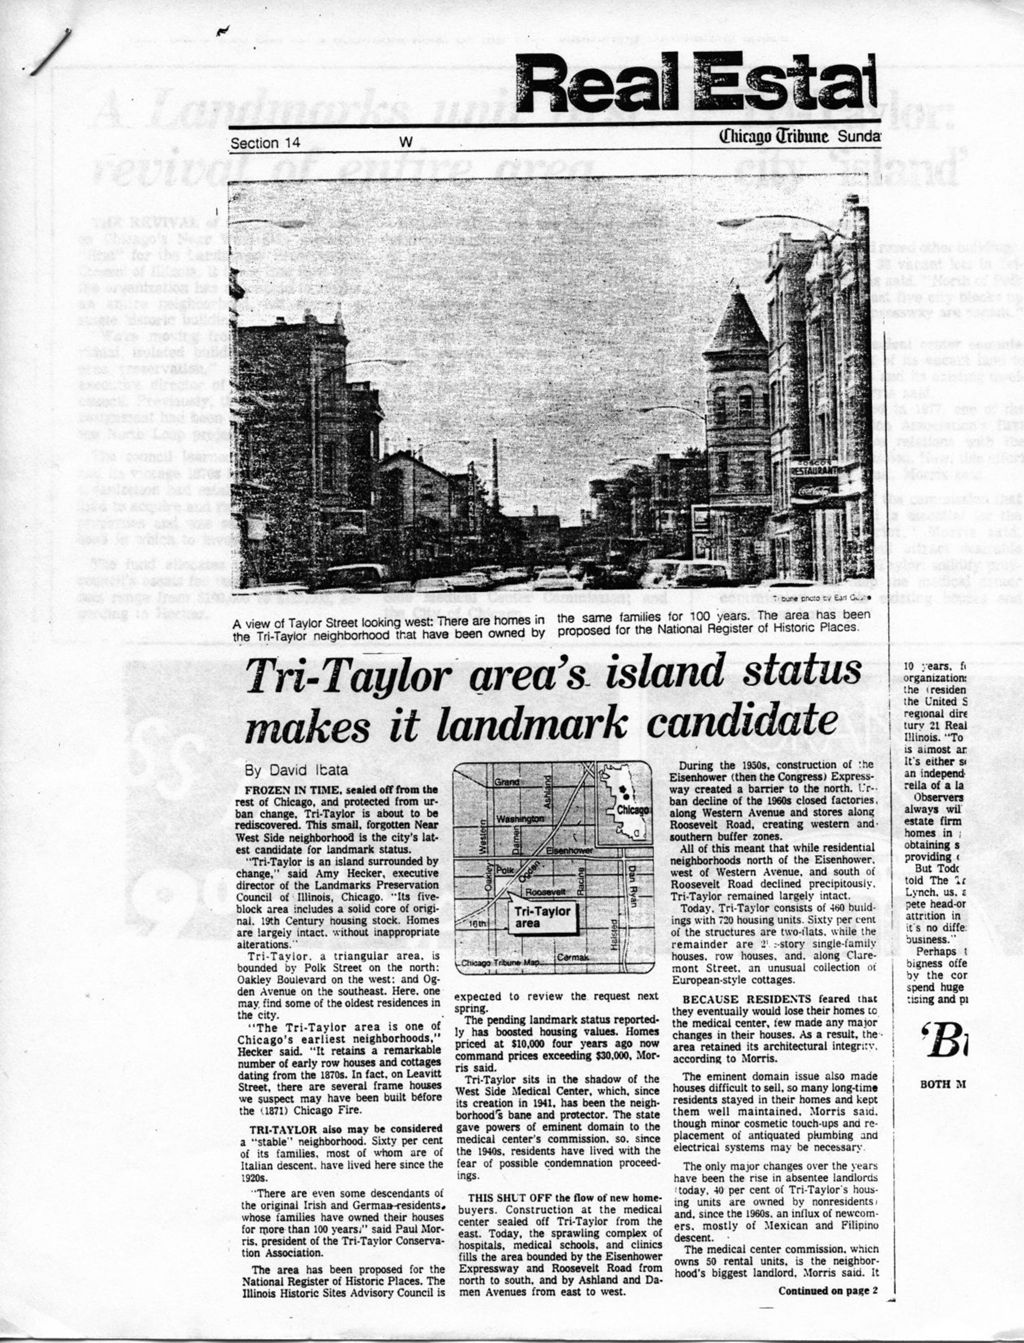 Miniature of Tri-Taylor area: Chicago Tribune article